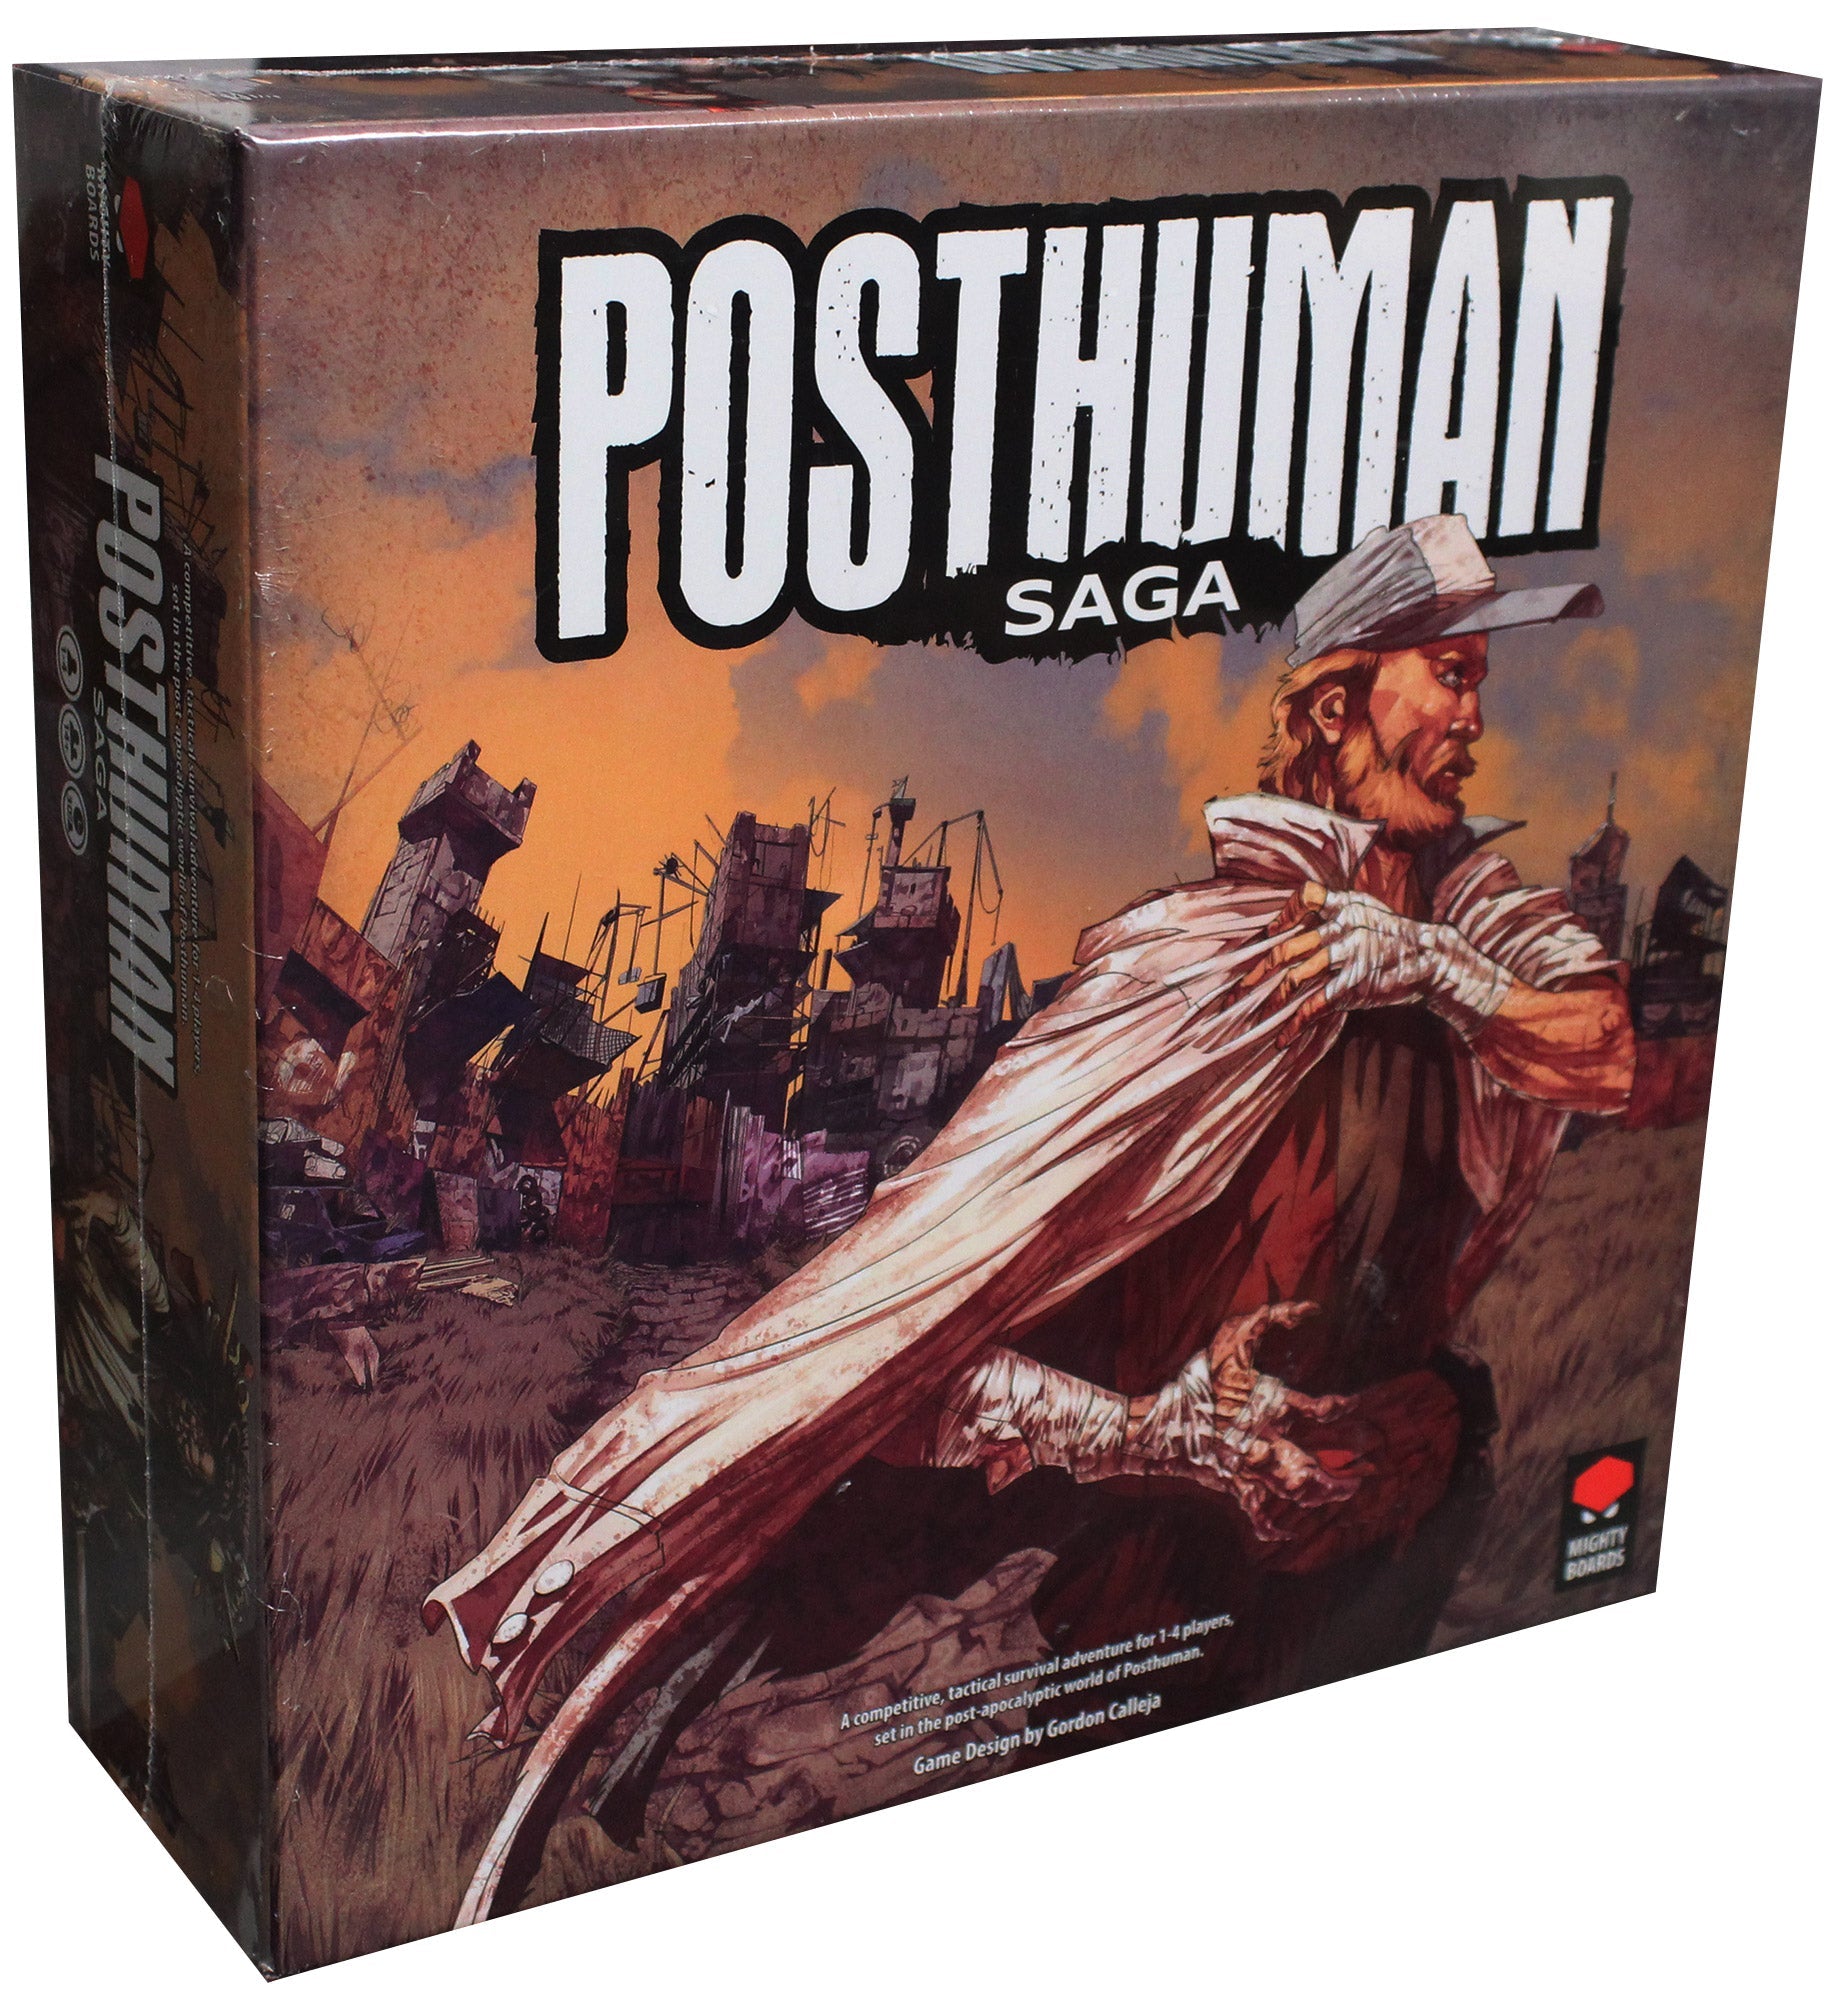 (BSG Certified USED) Posthuman Saga